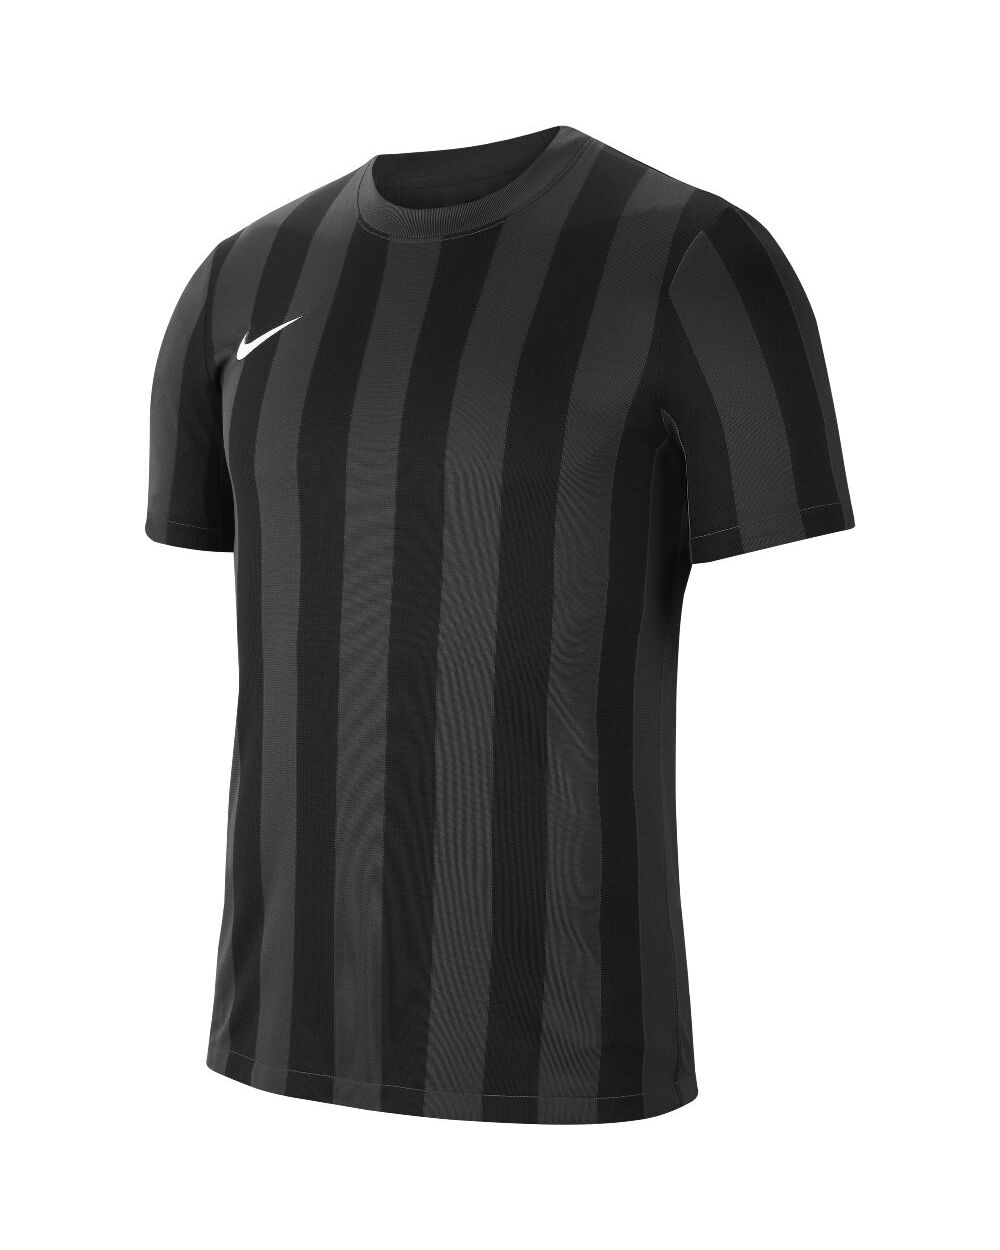 Camiseta Nike Striped Division IV Gris y Negro para Hombre - CW3813-060